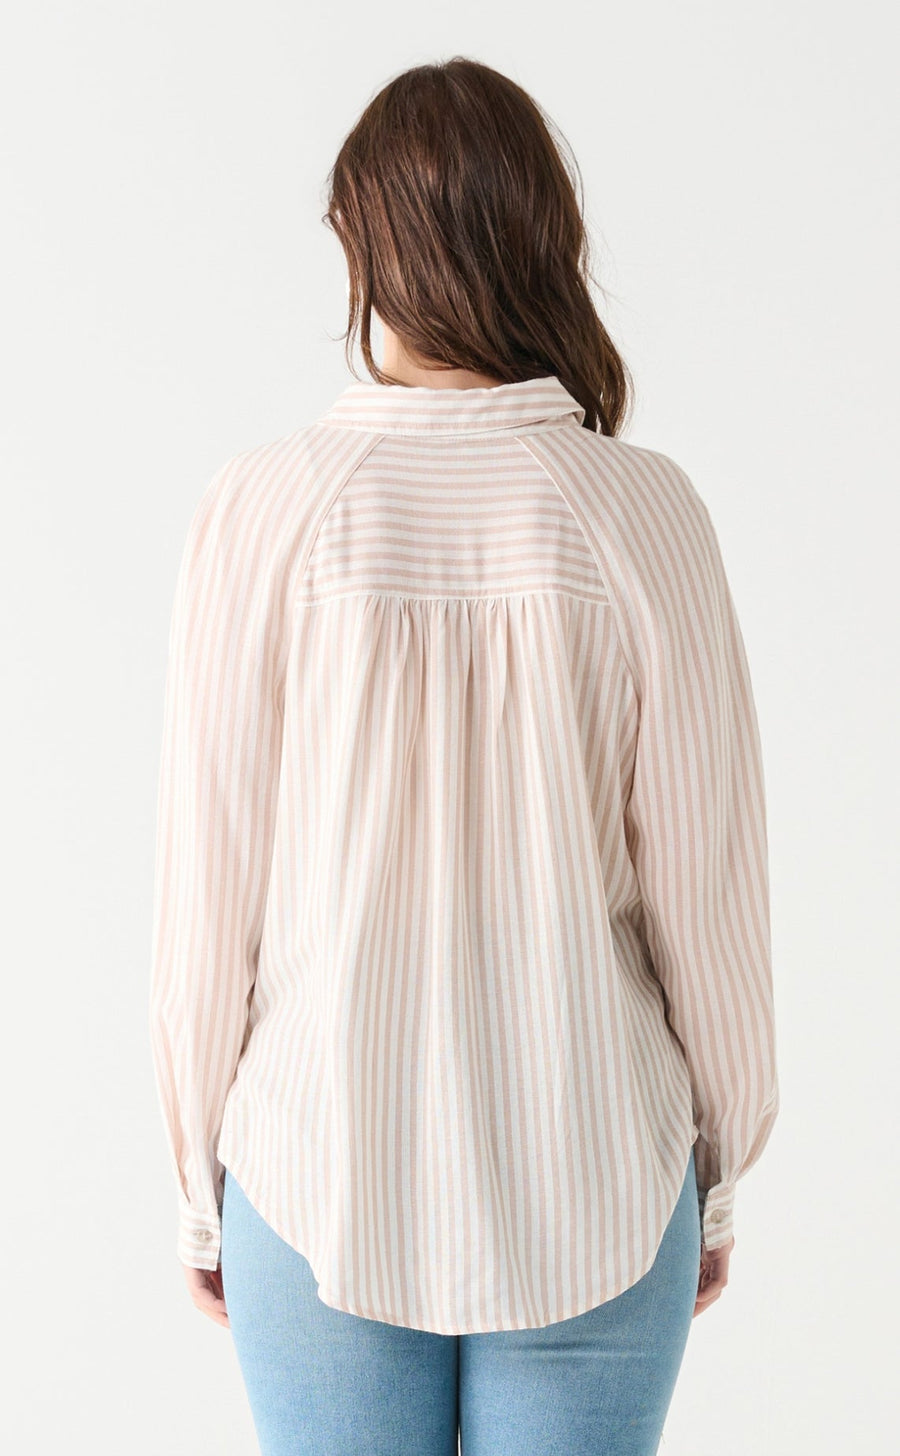 Striped raglan sleeved shirt by Black Tape - Blue Sky Fashions & Lingerie